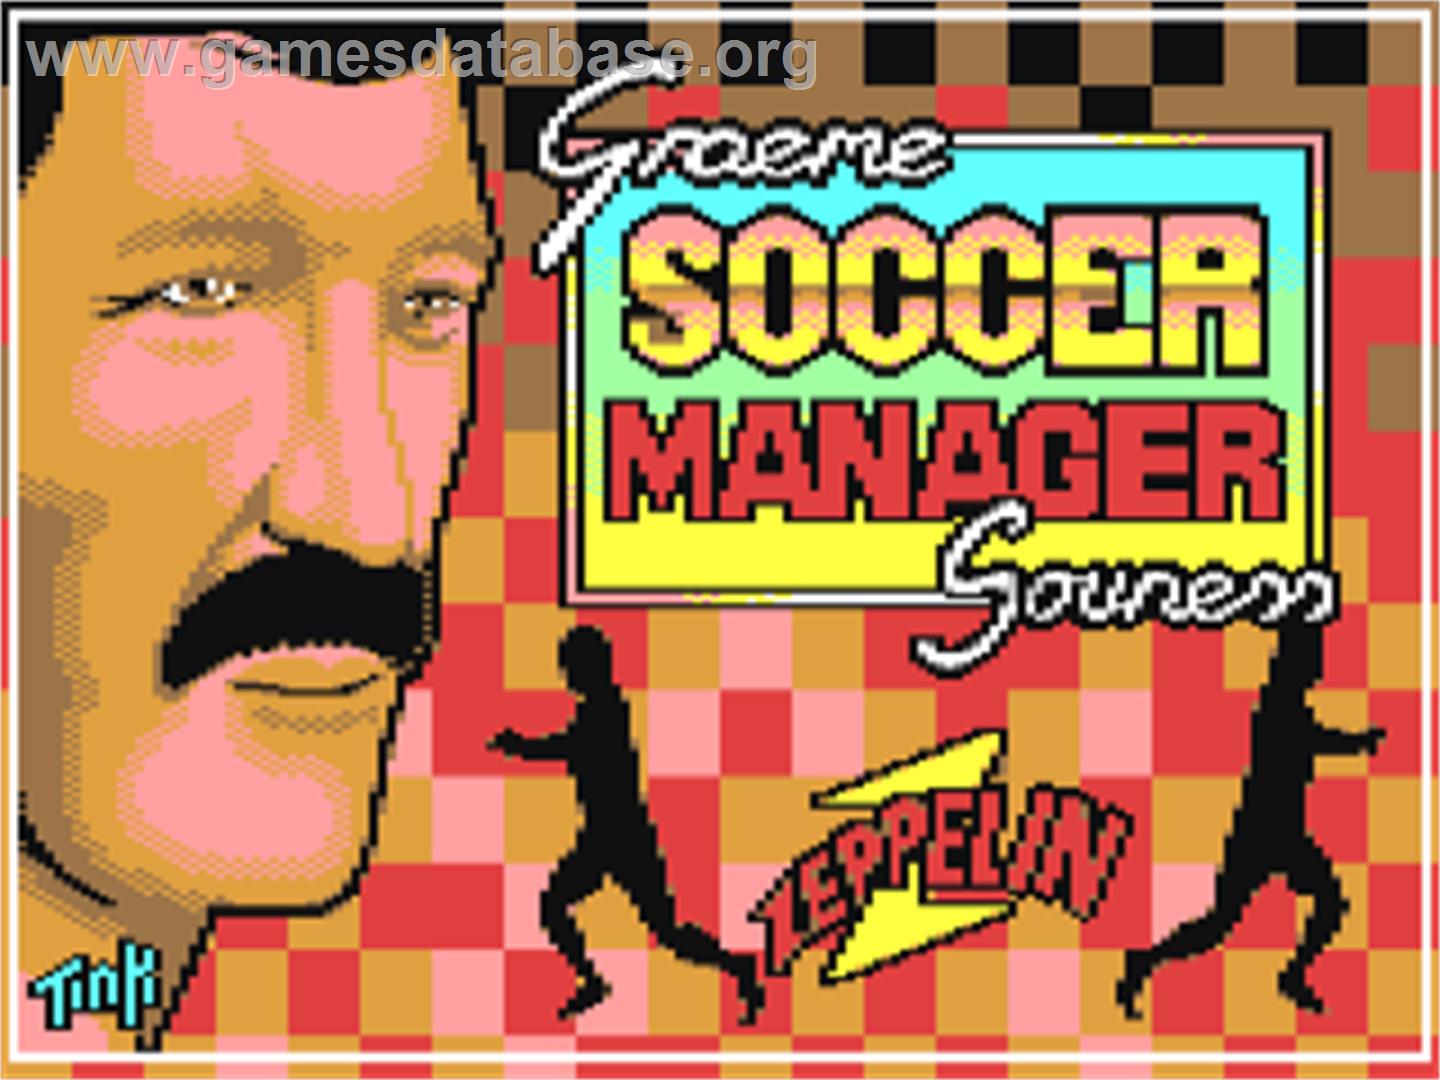 Graeme Souness Soccer Manager - Commodore 64 - Artwork - Title Screen